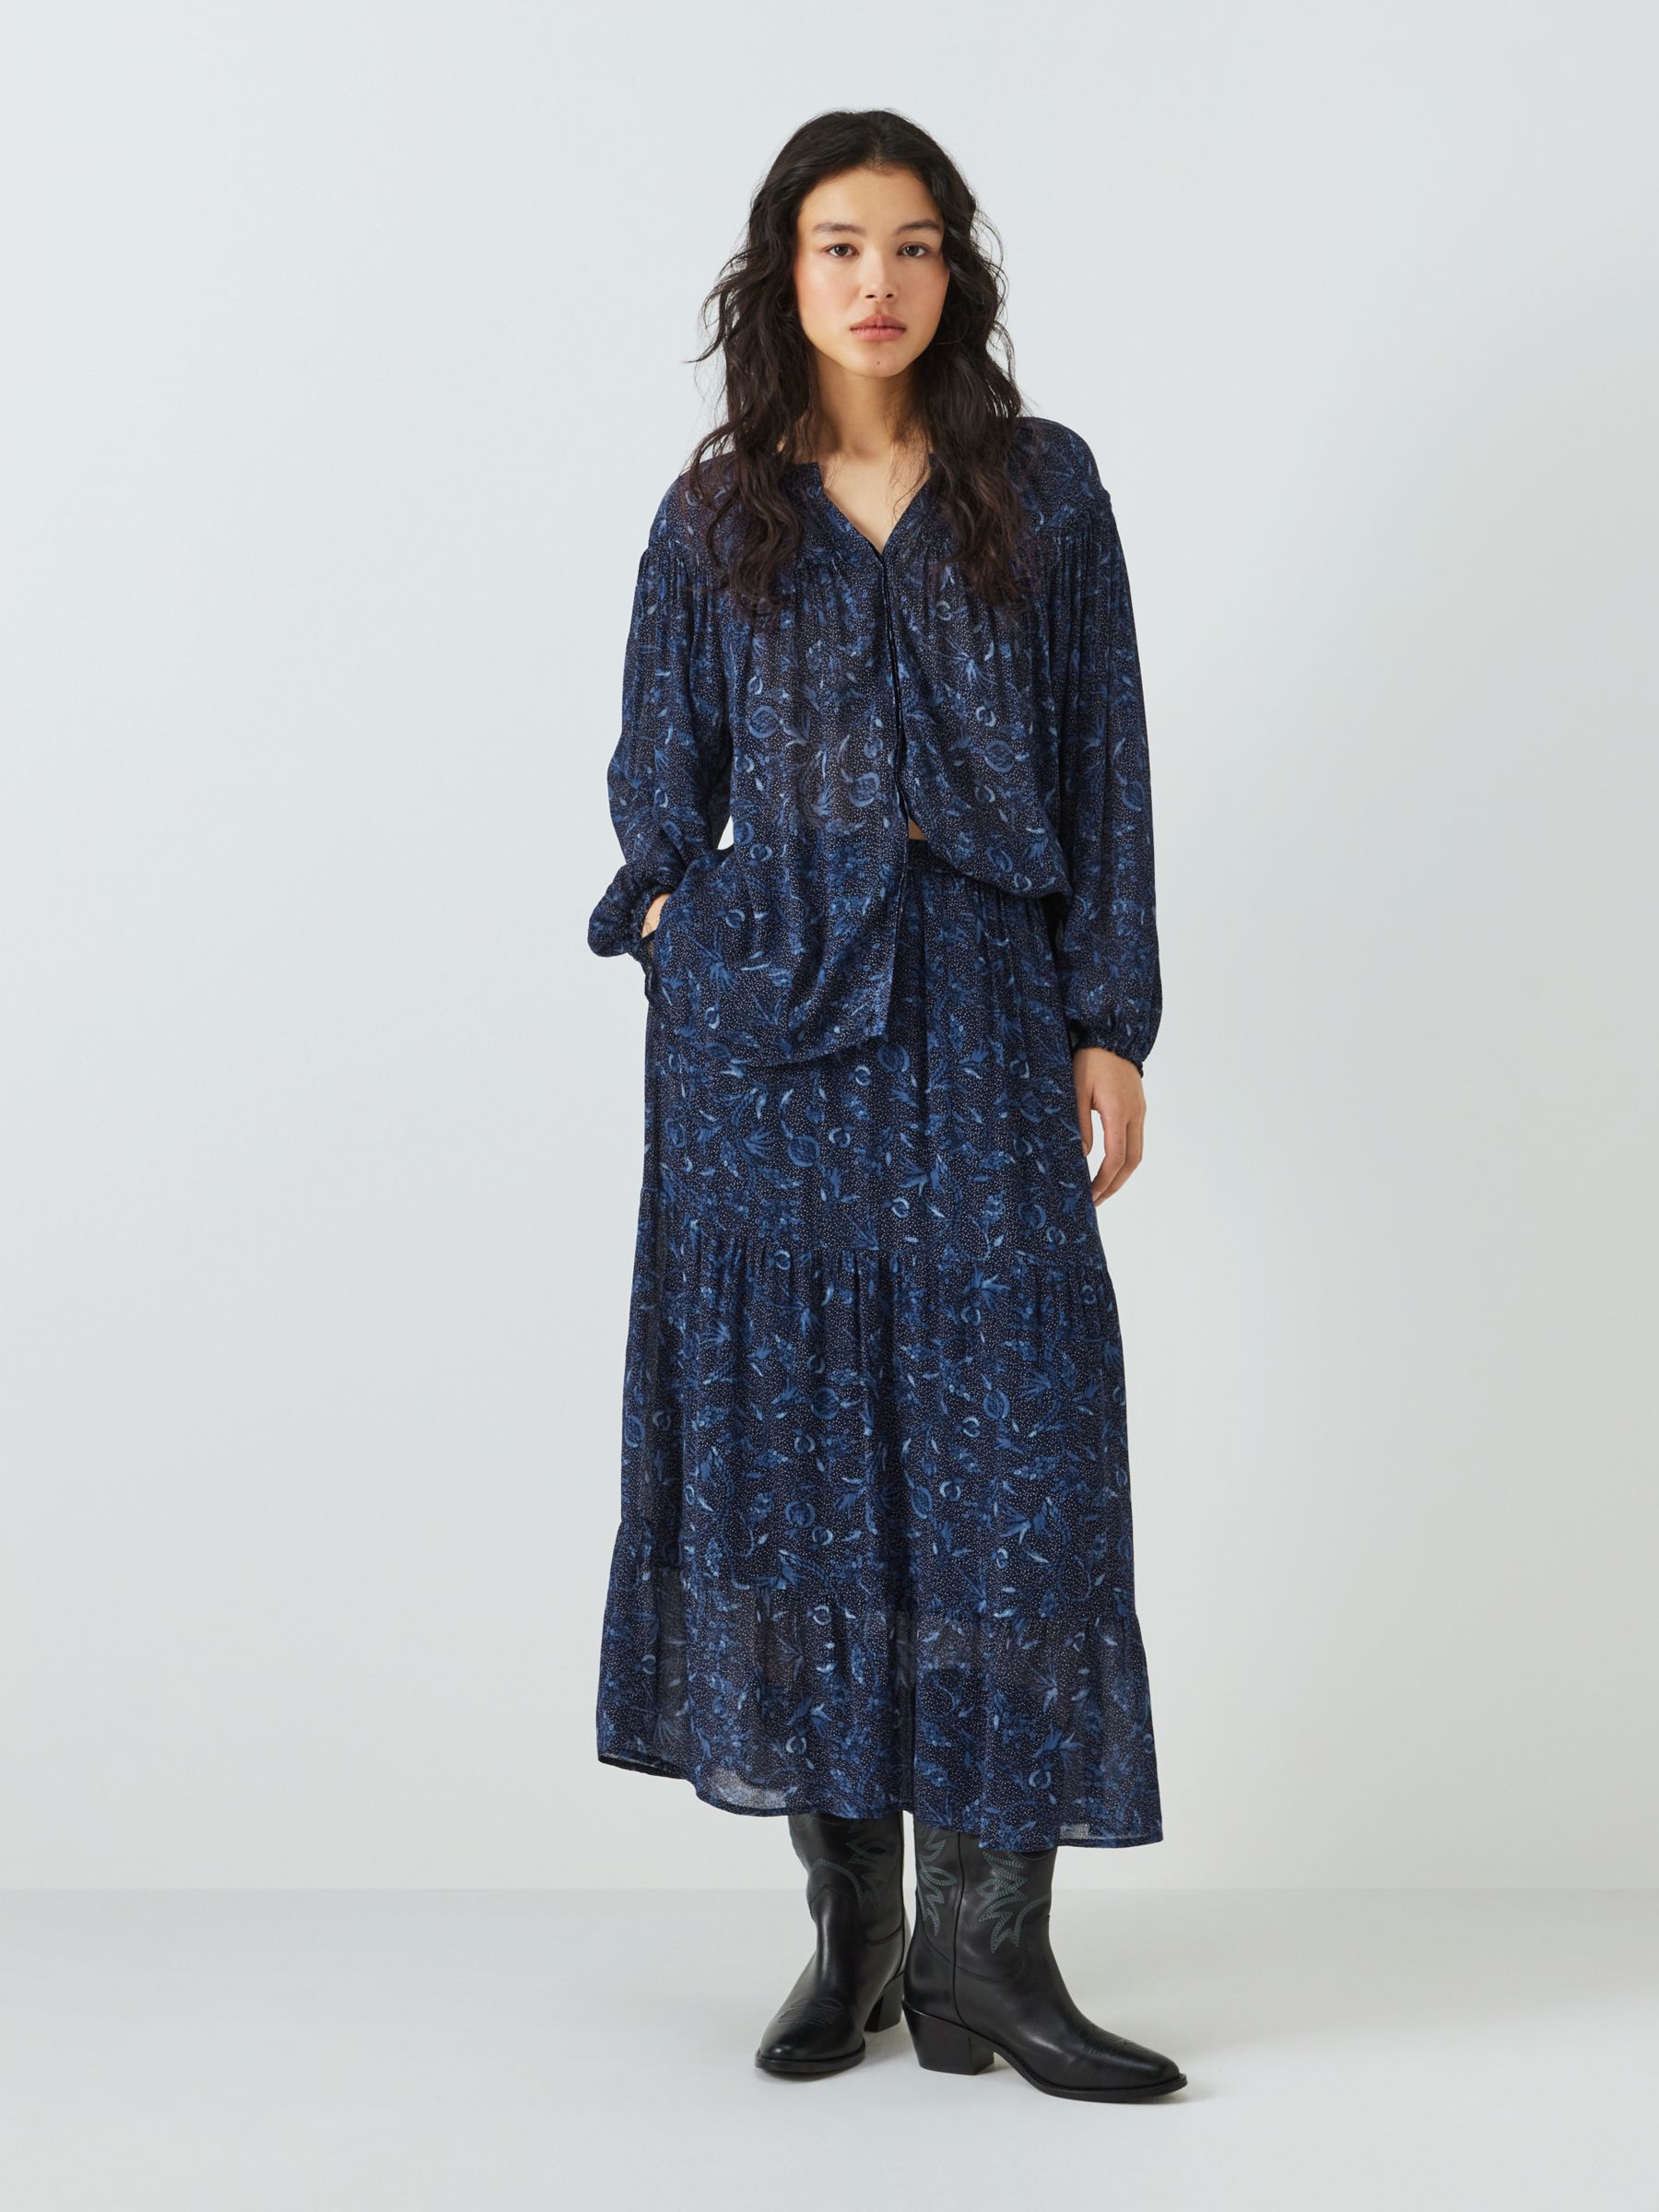 AND/OR Shibori Francesca Tiered Floral Midi Skirt, Blue, 12